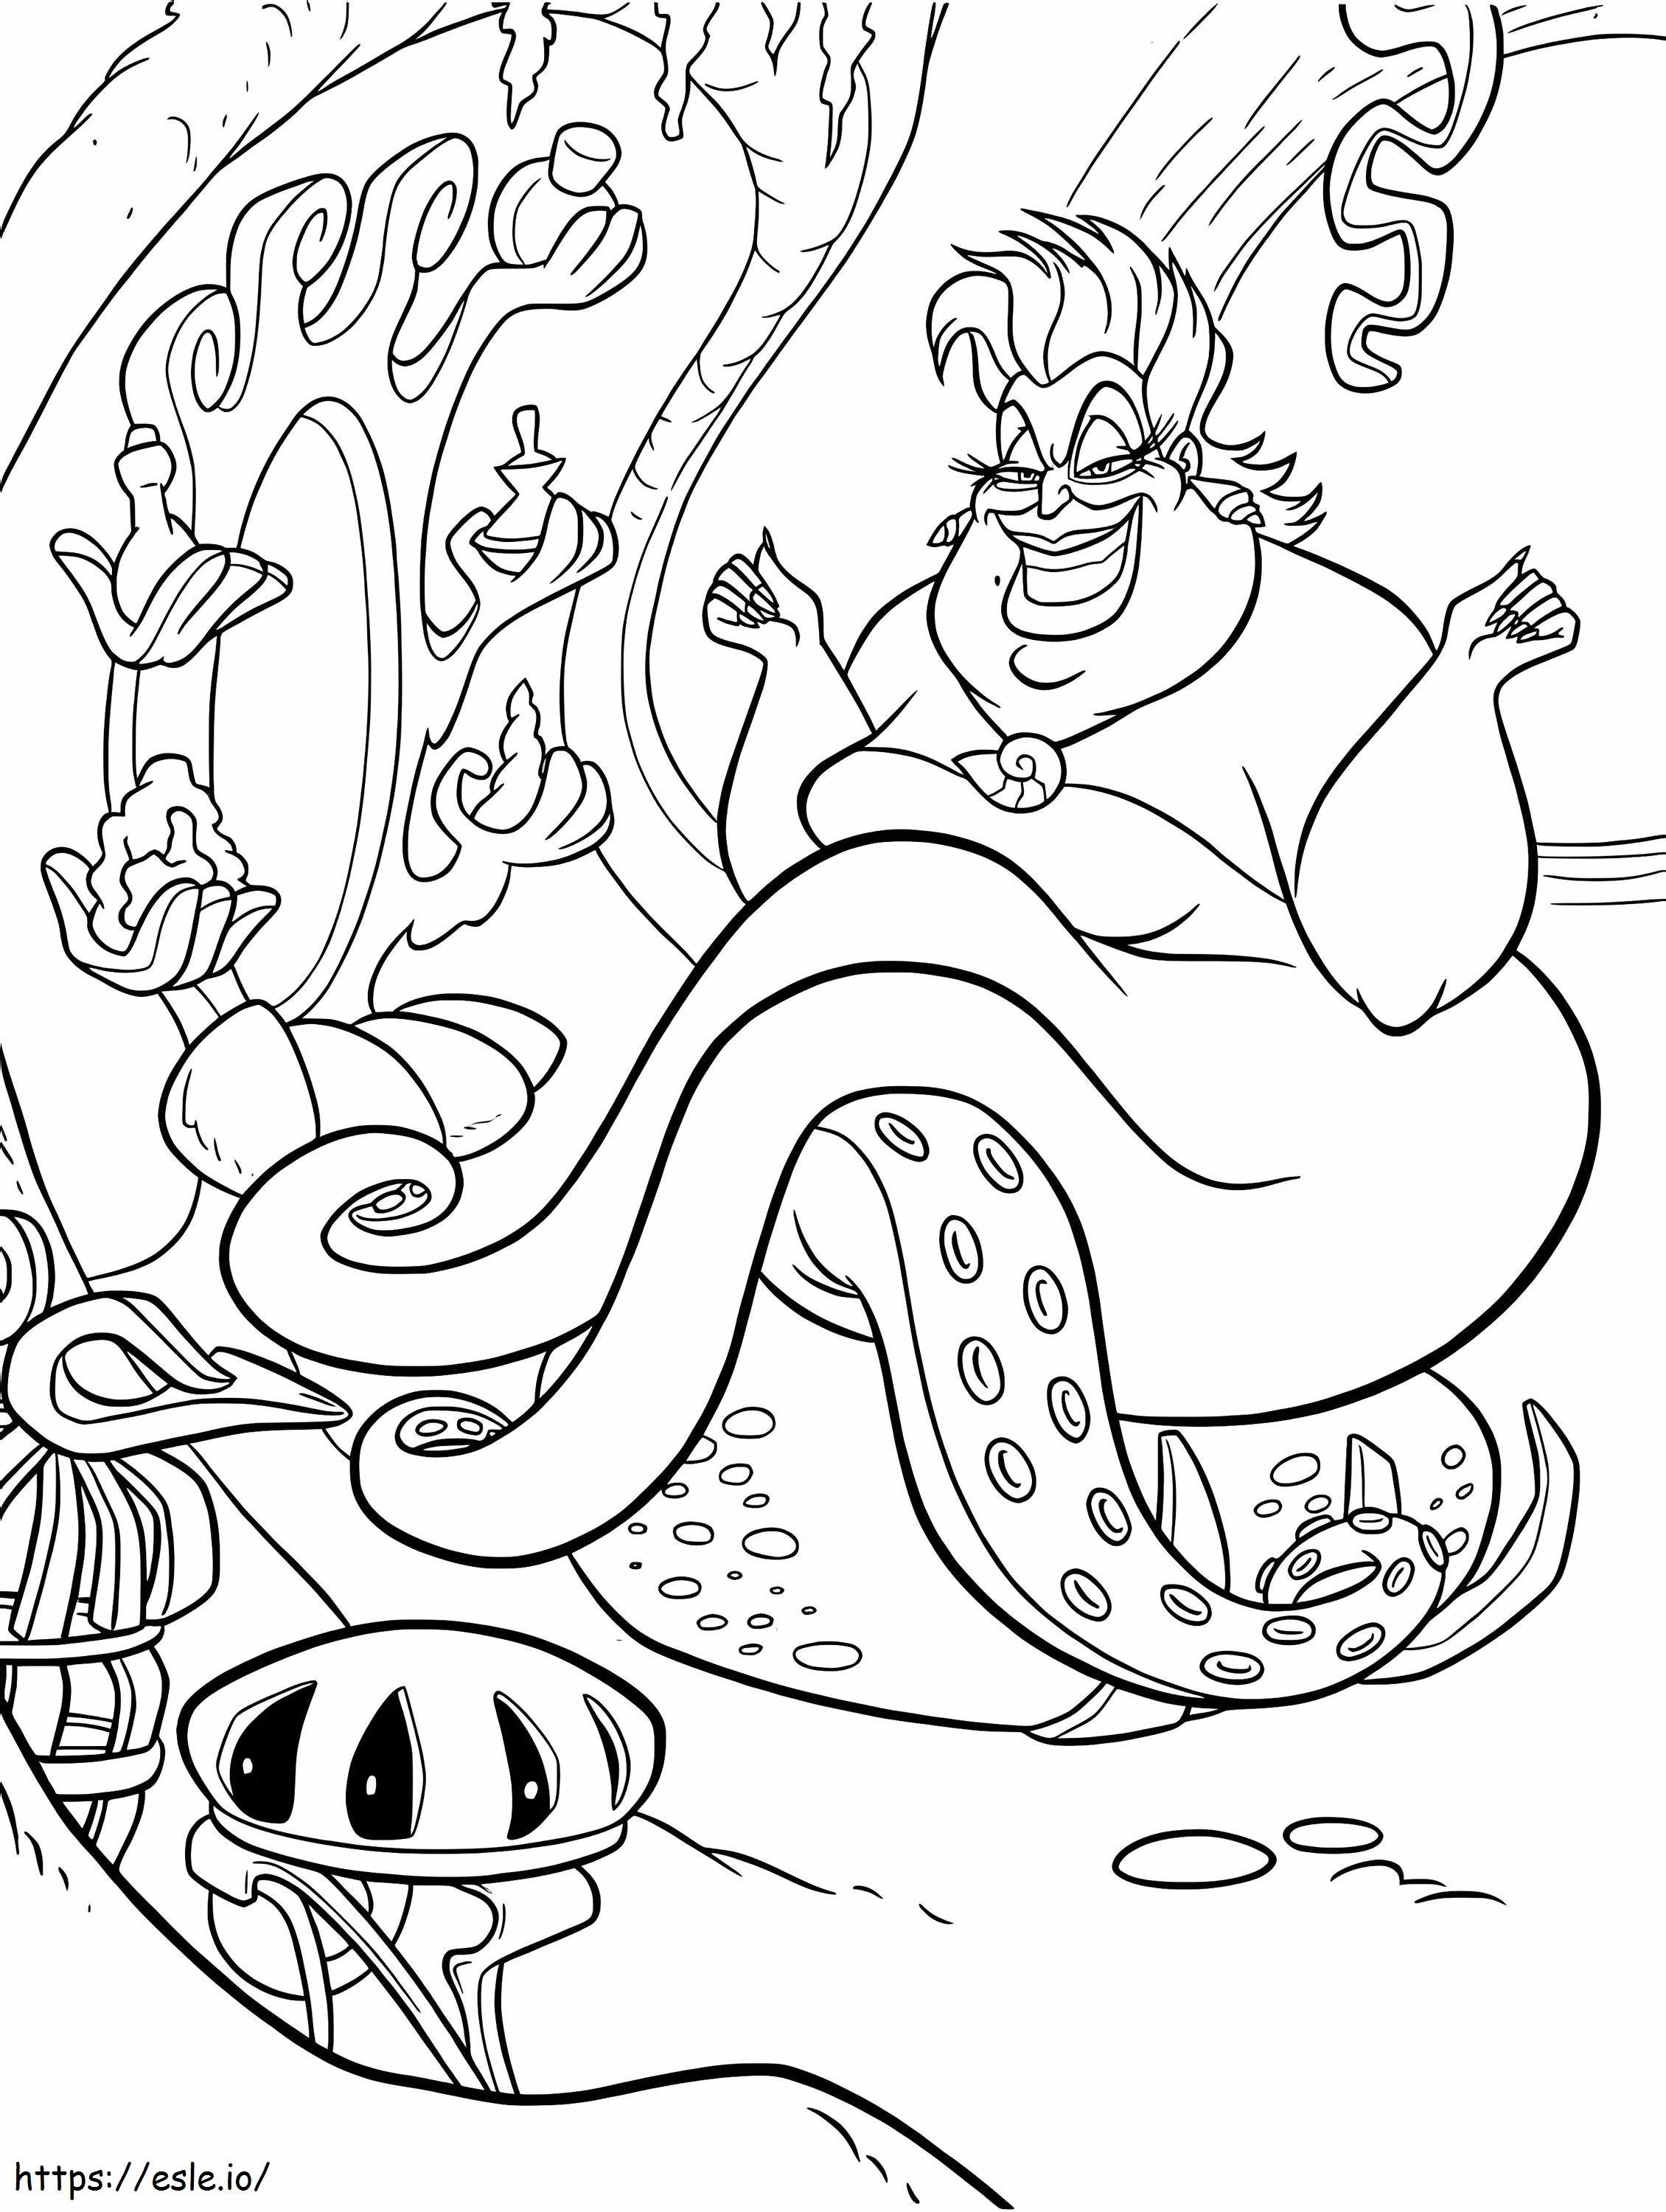 Evil Ursula coloring page